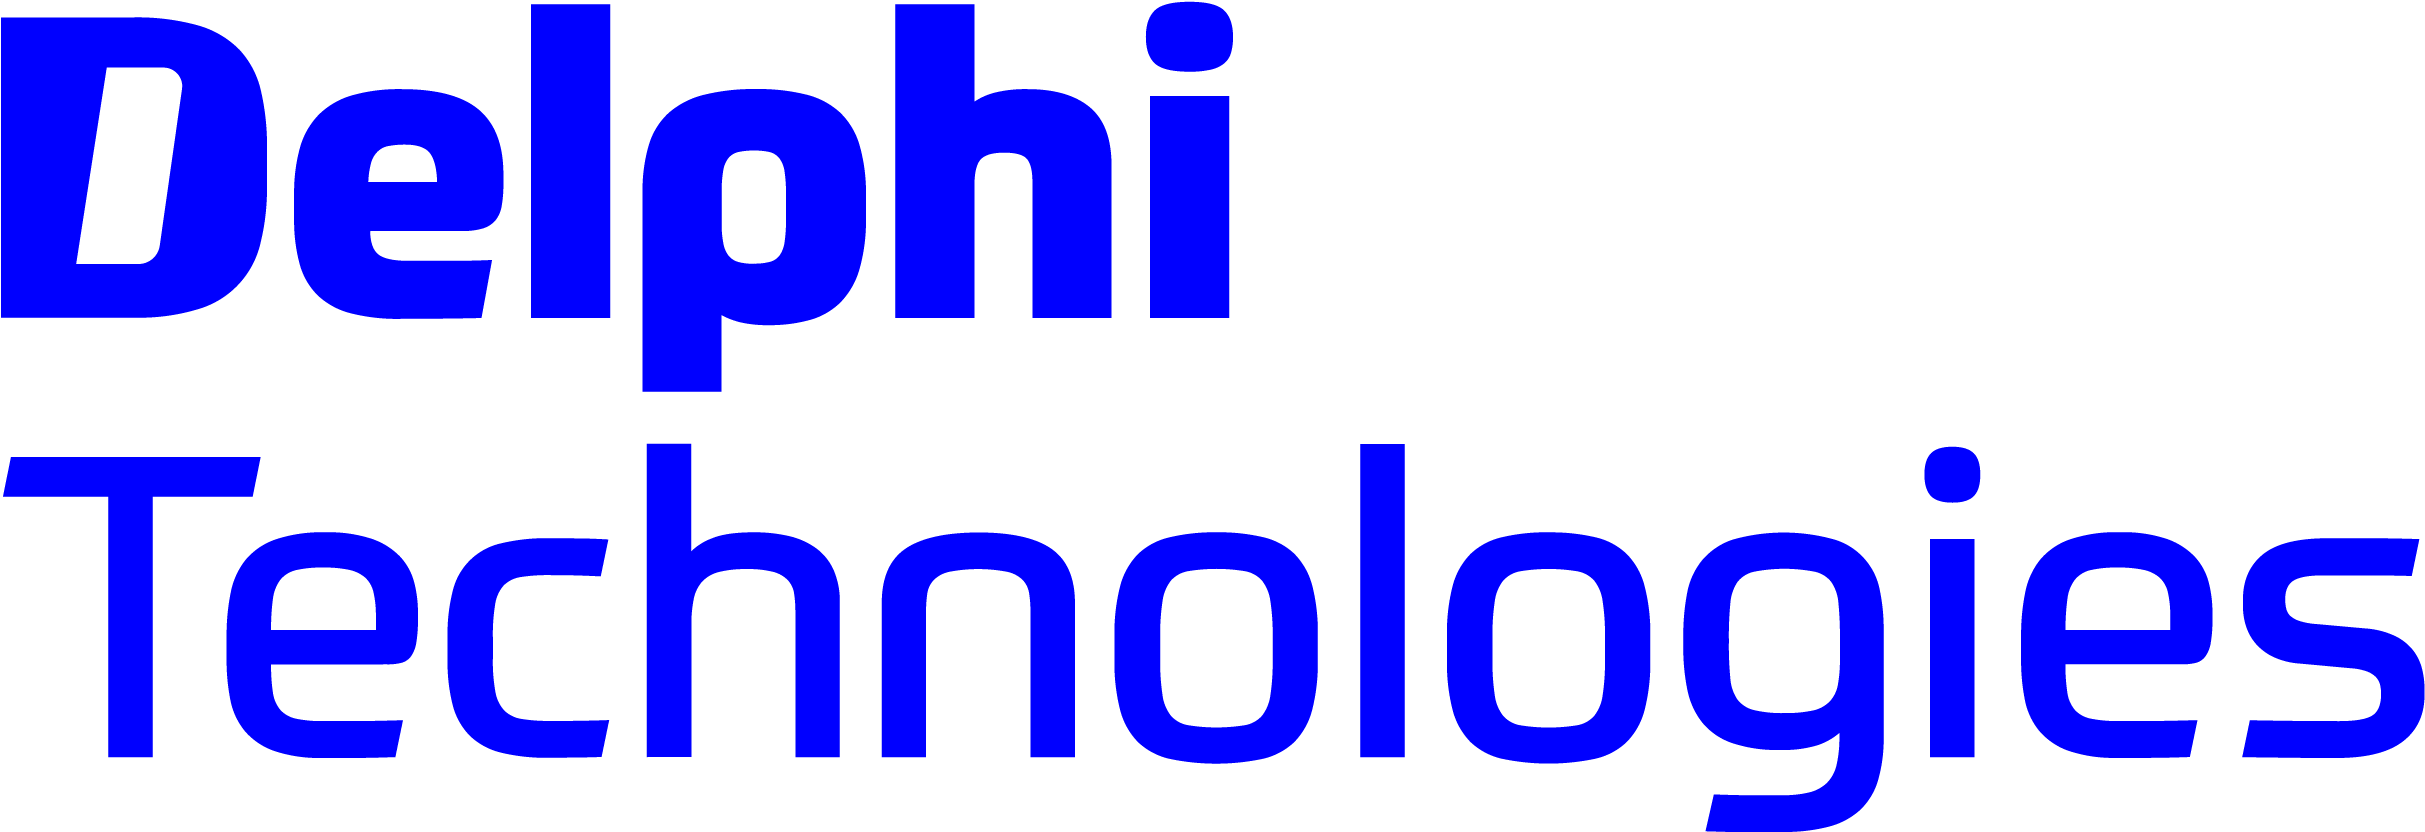 Delphi Technologies Ninubo sistemas maquiladora